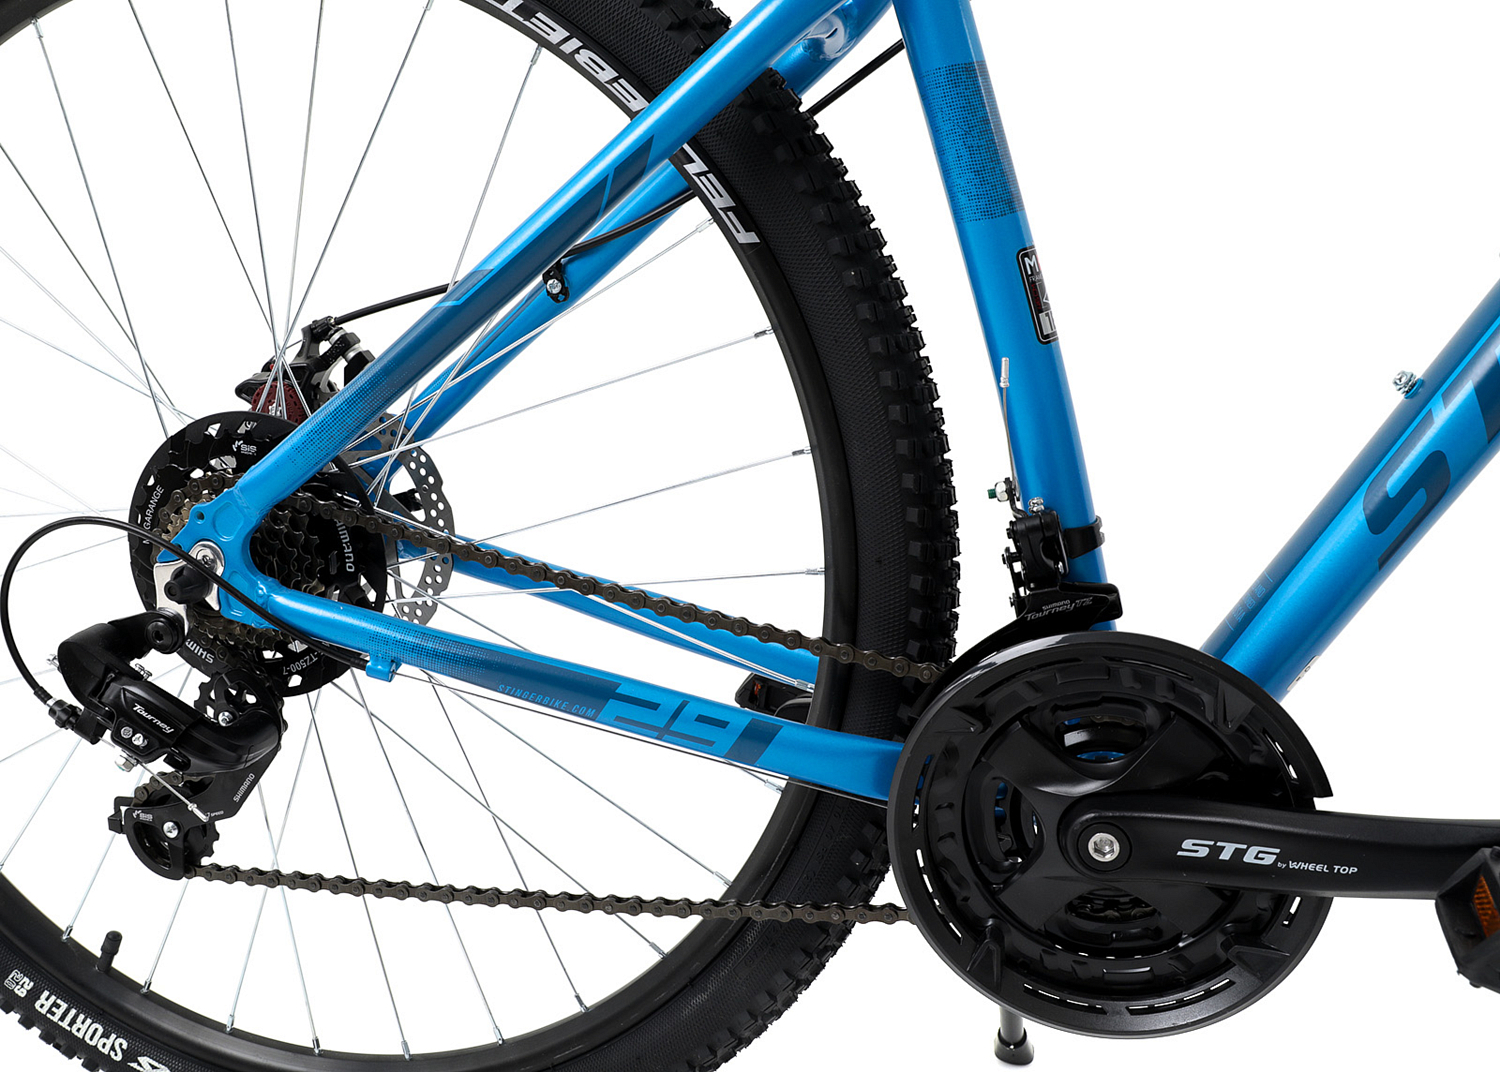 Велосипед Stinger Element Evo 29 Синий